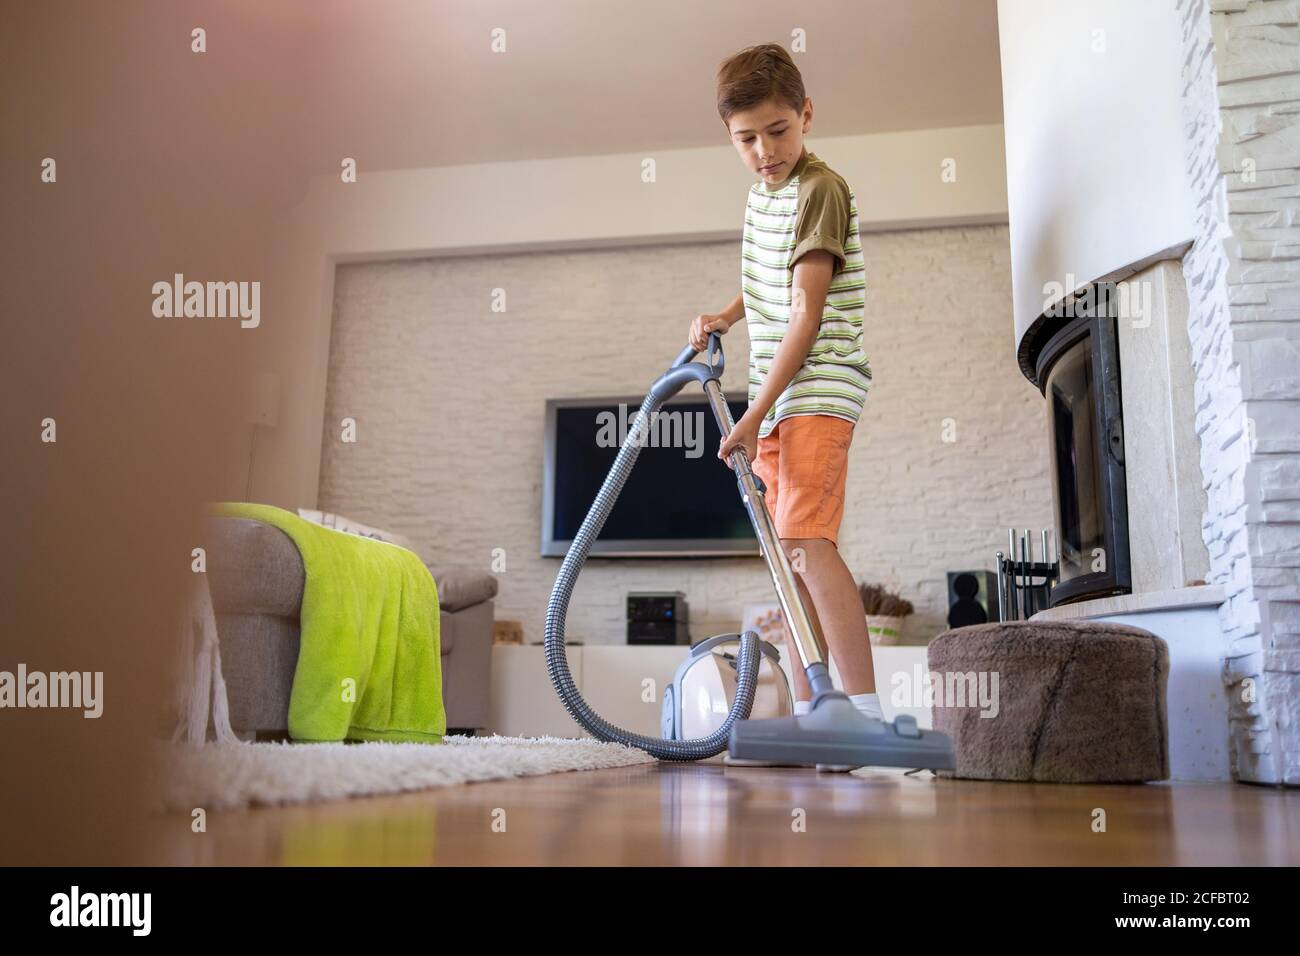 Boy vacuuming floor at home Stock Photo